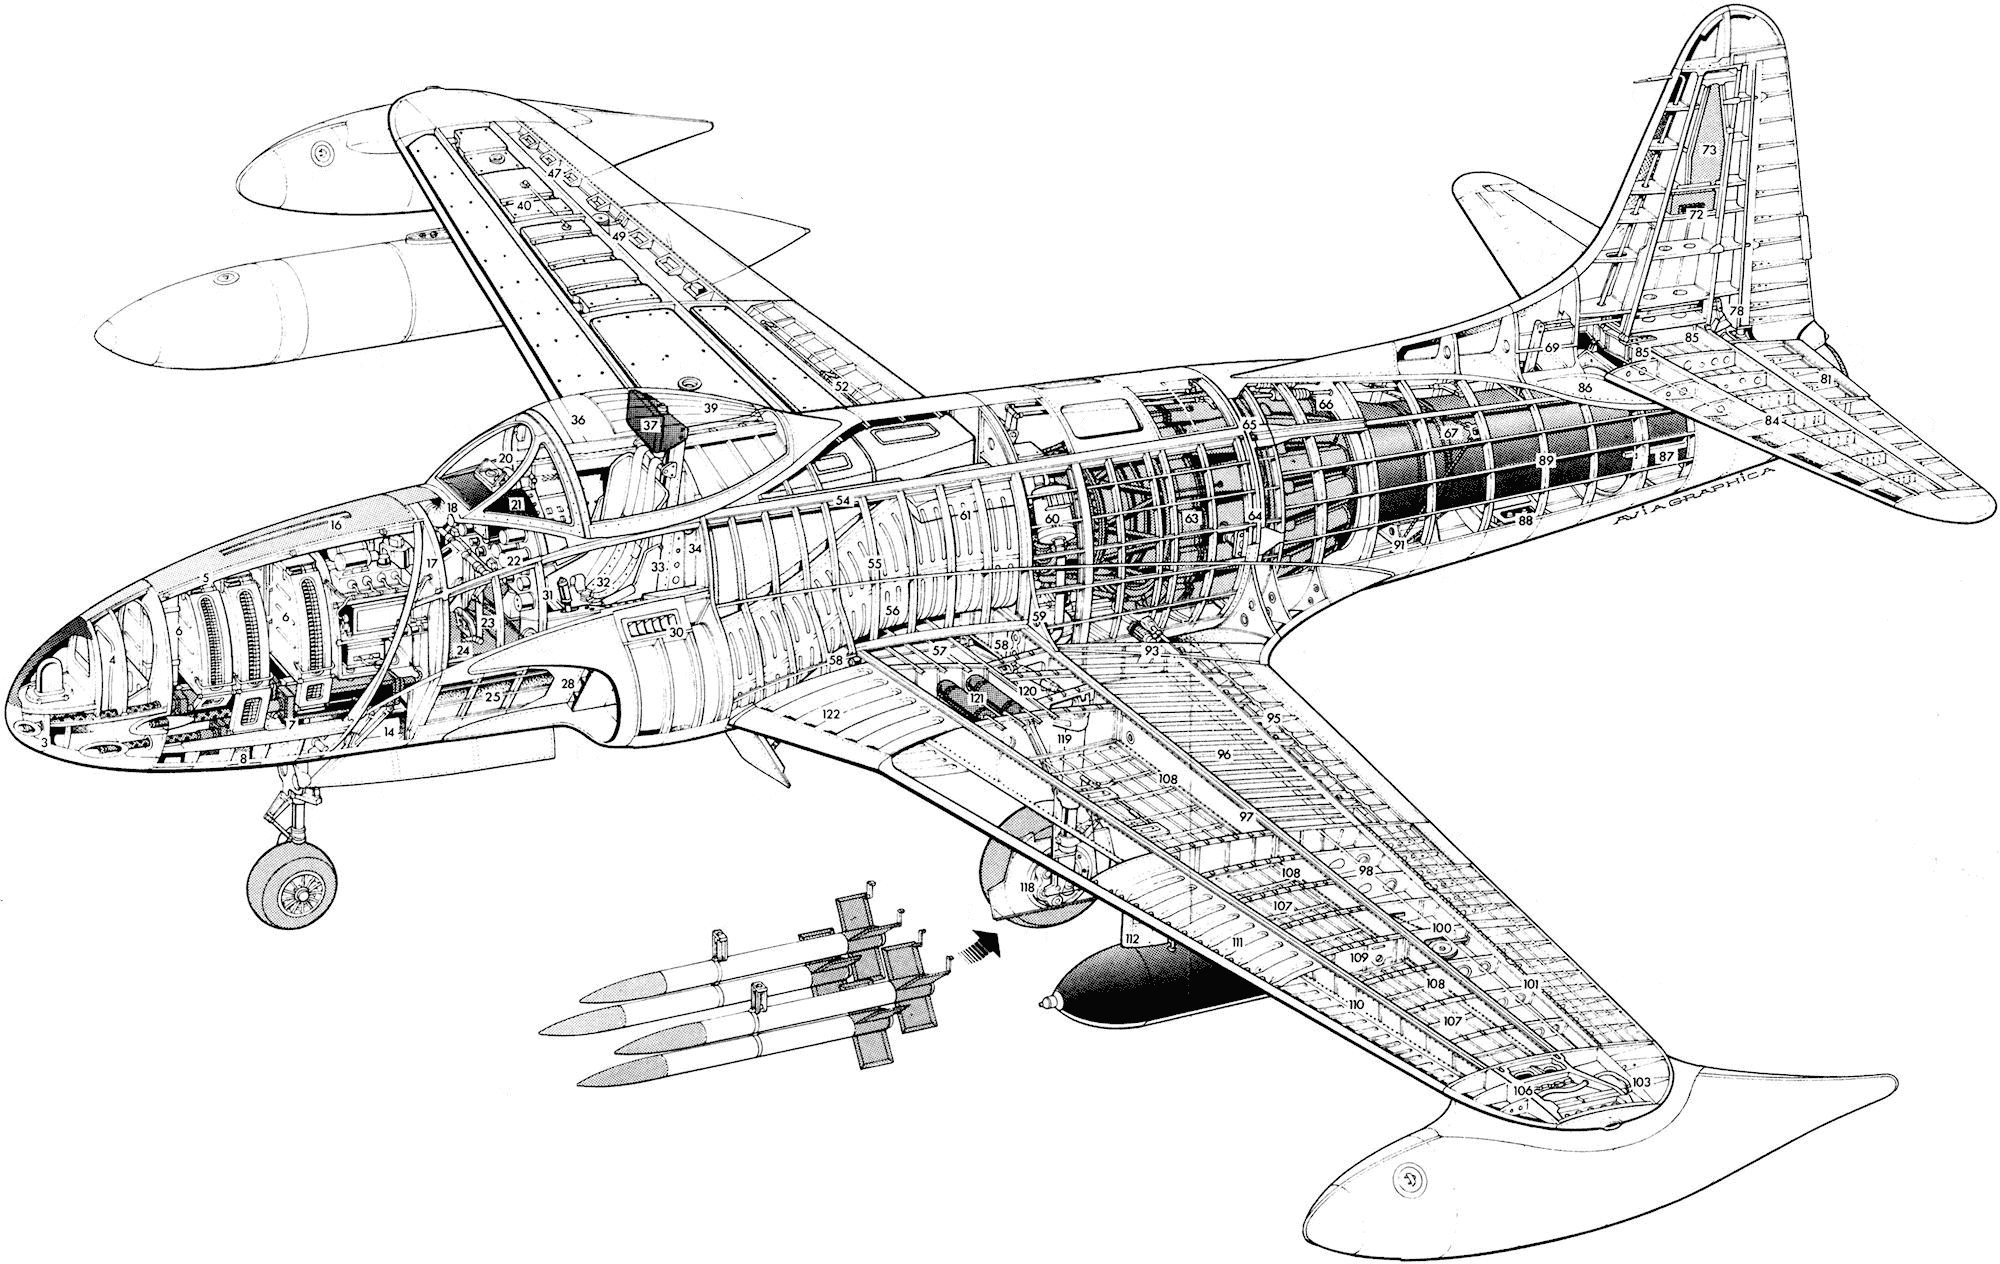 P-80 Shooting Star cutaway drawing